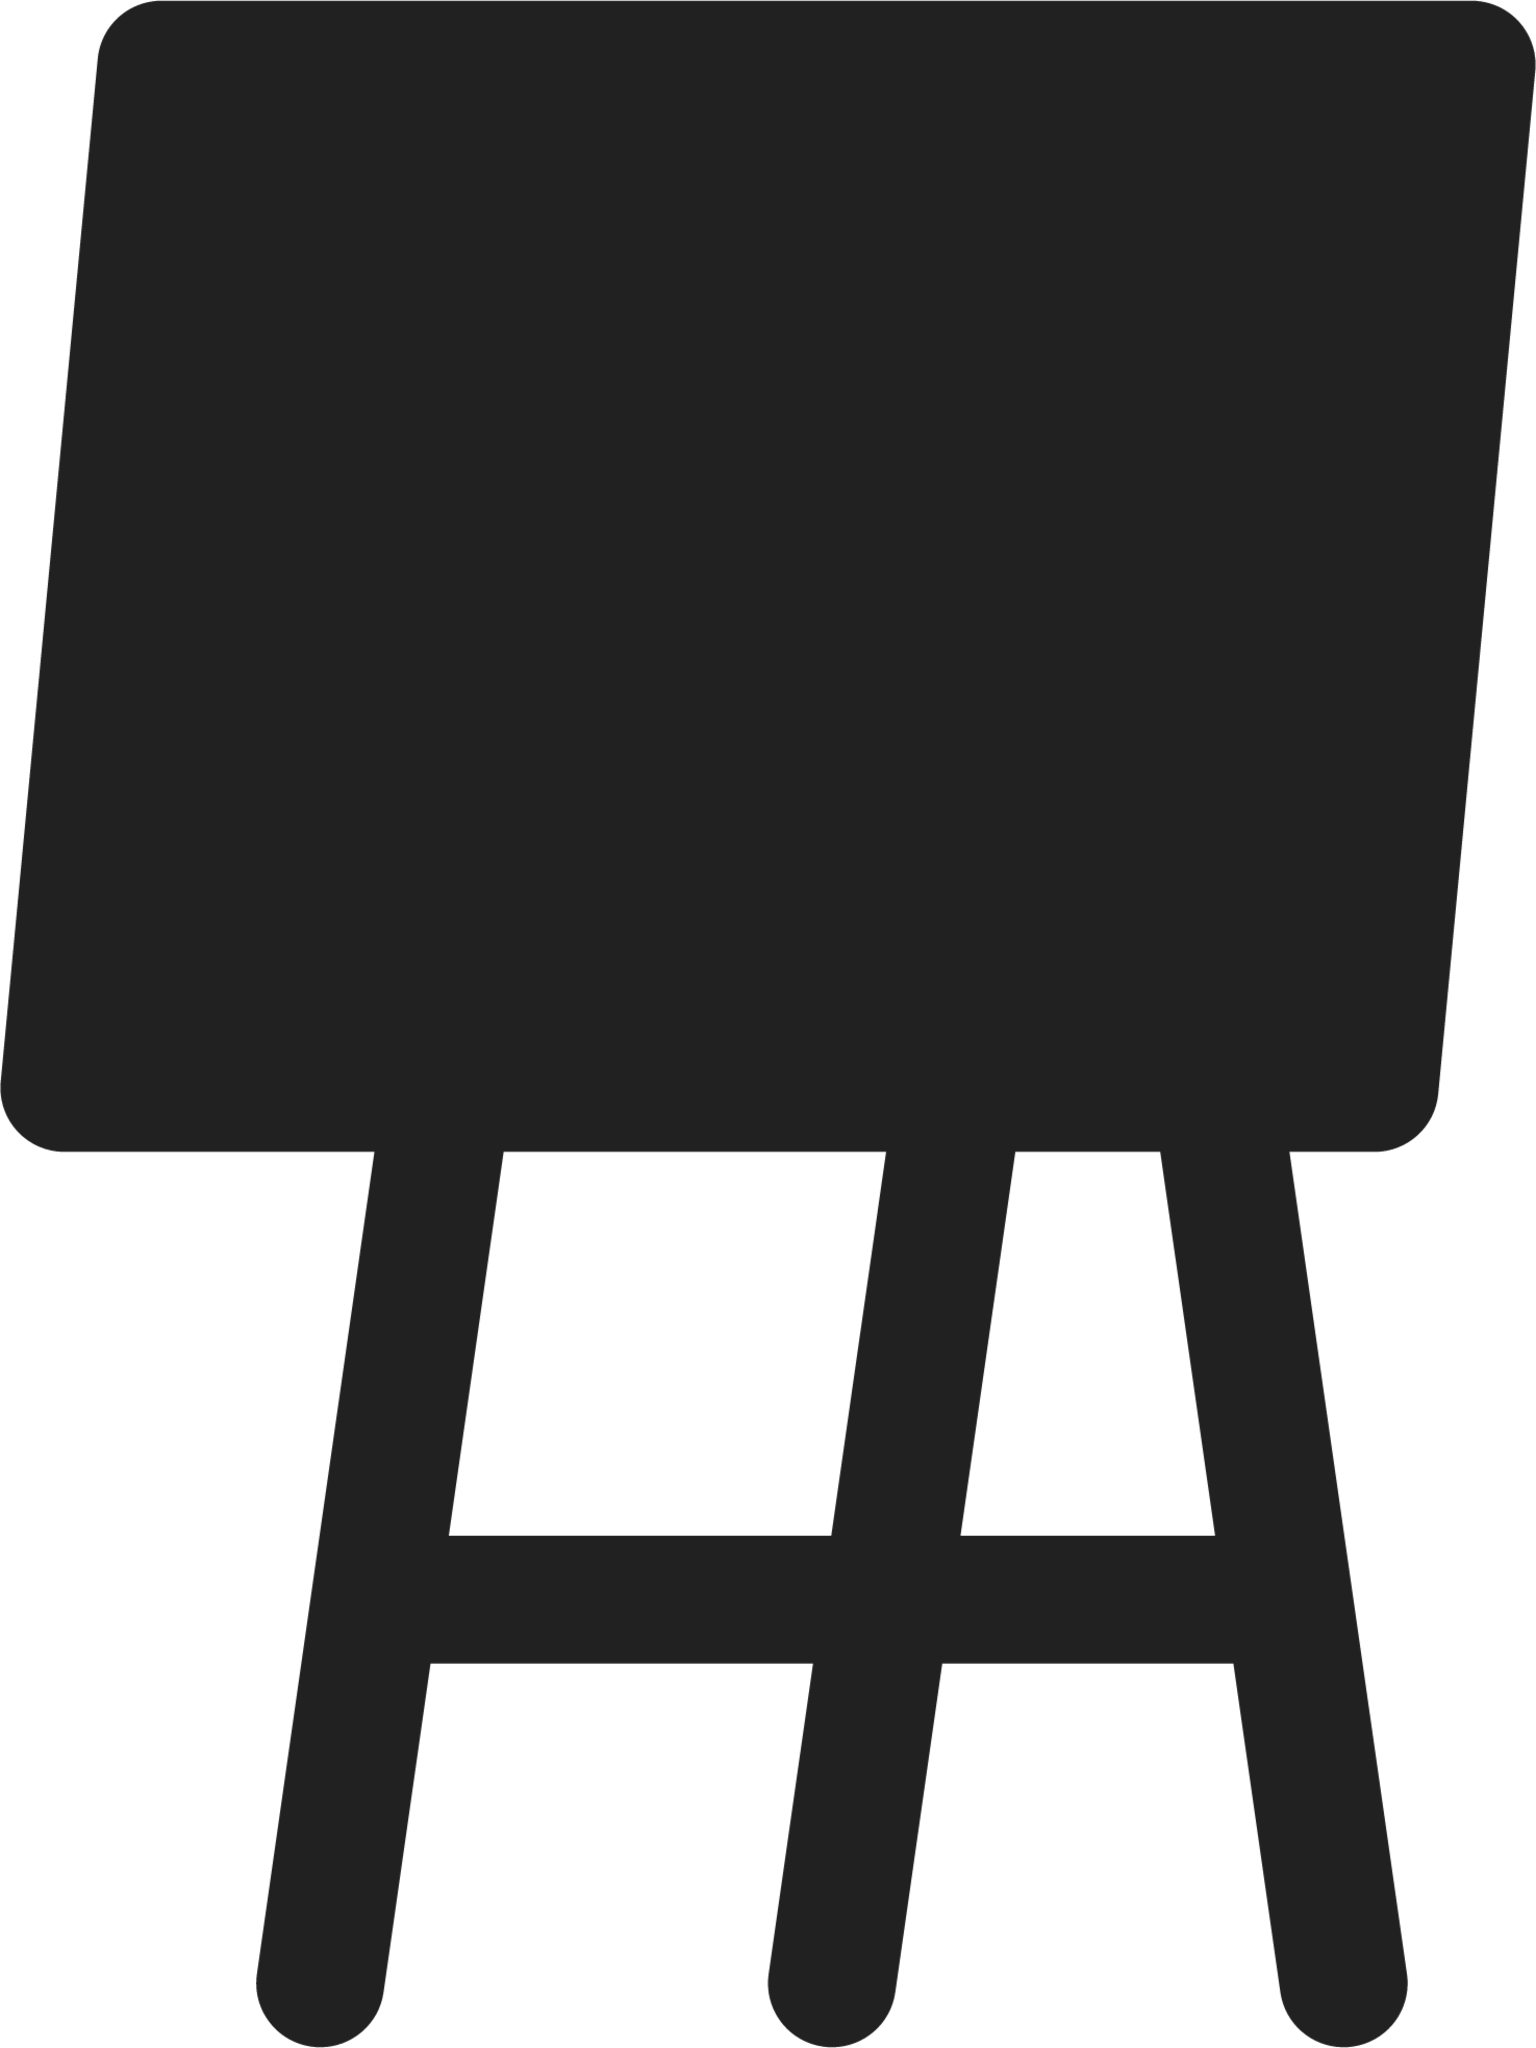 Surface Hub icon